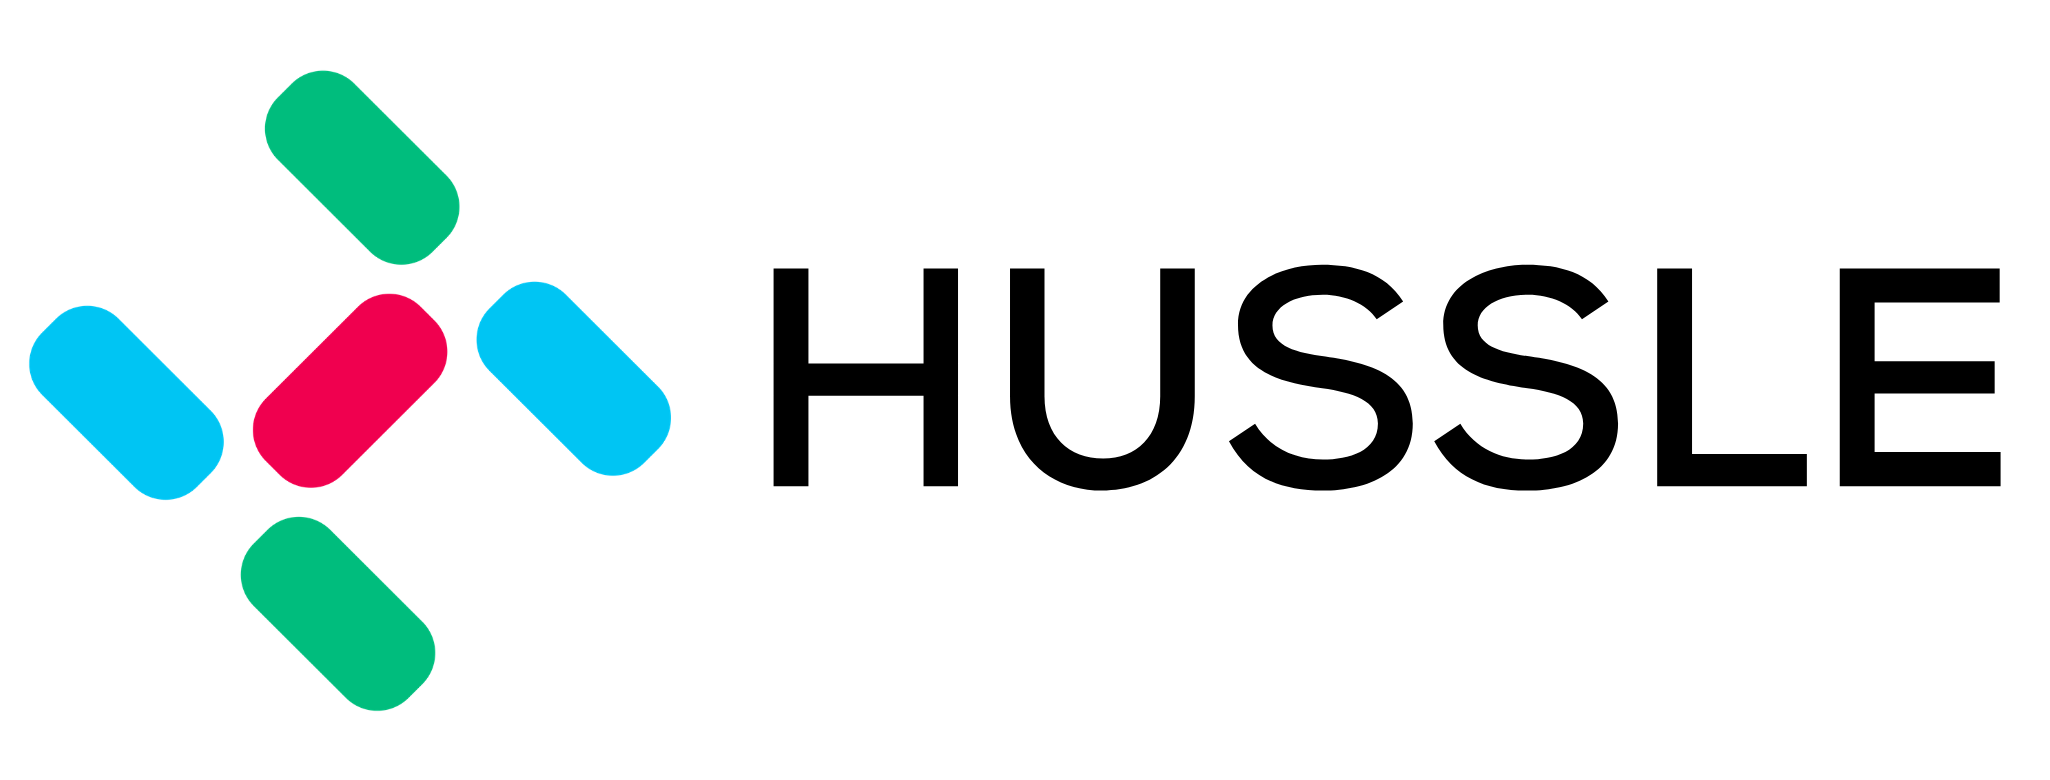 Hussle black logo